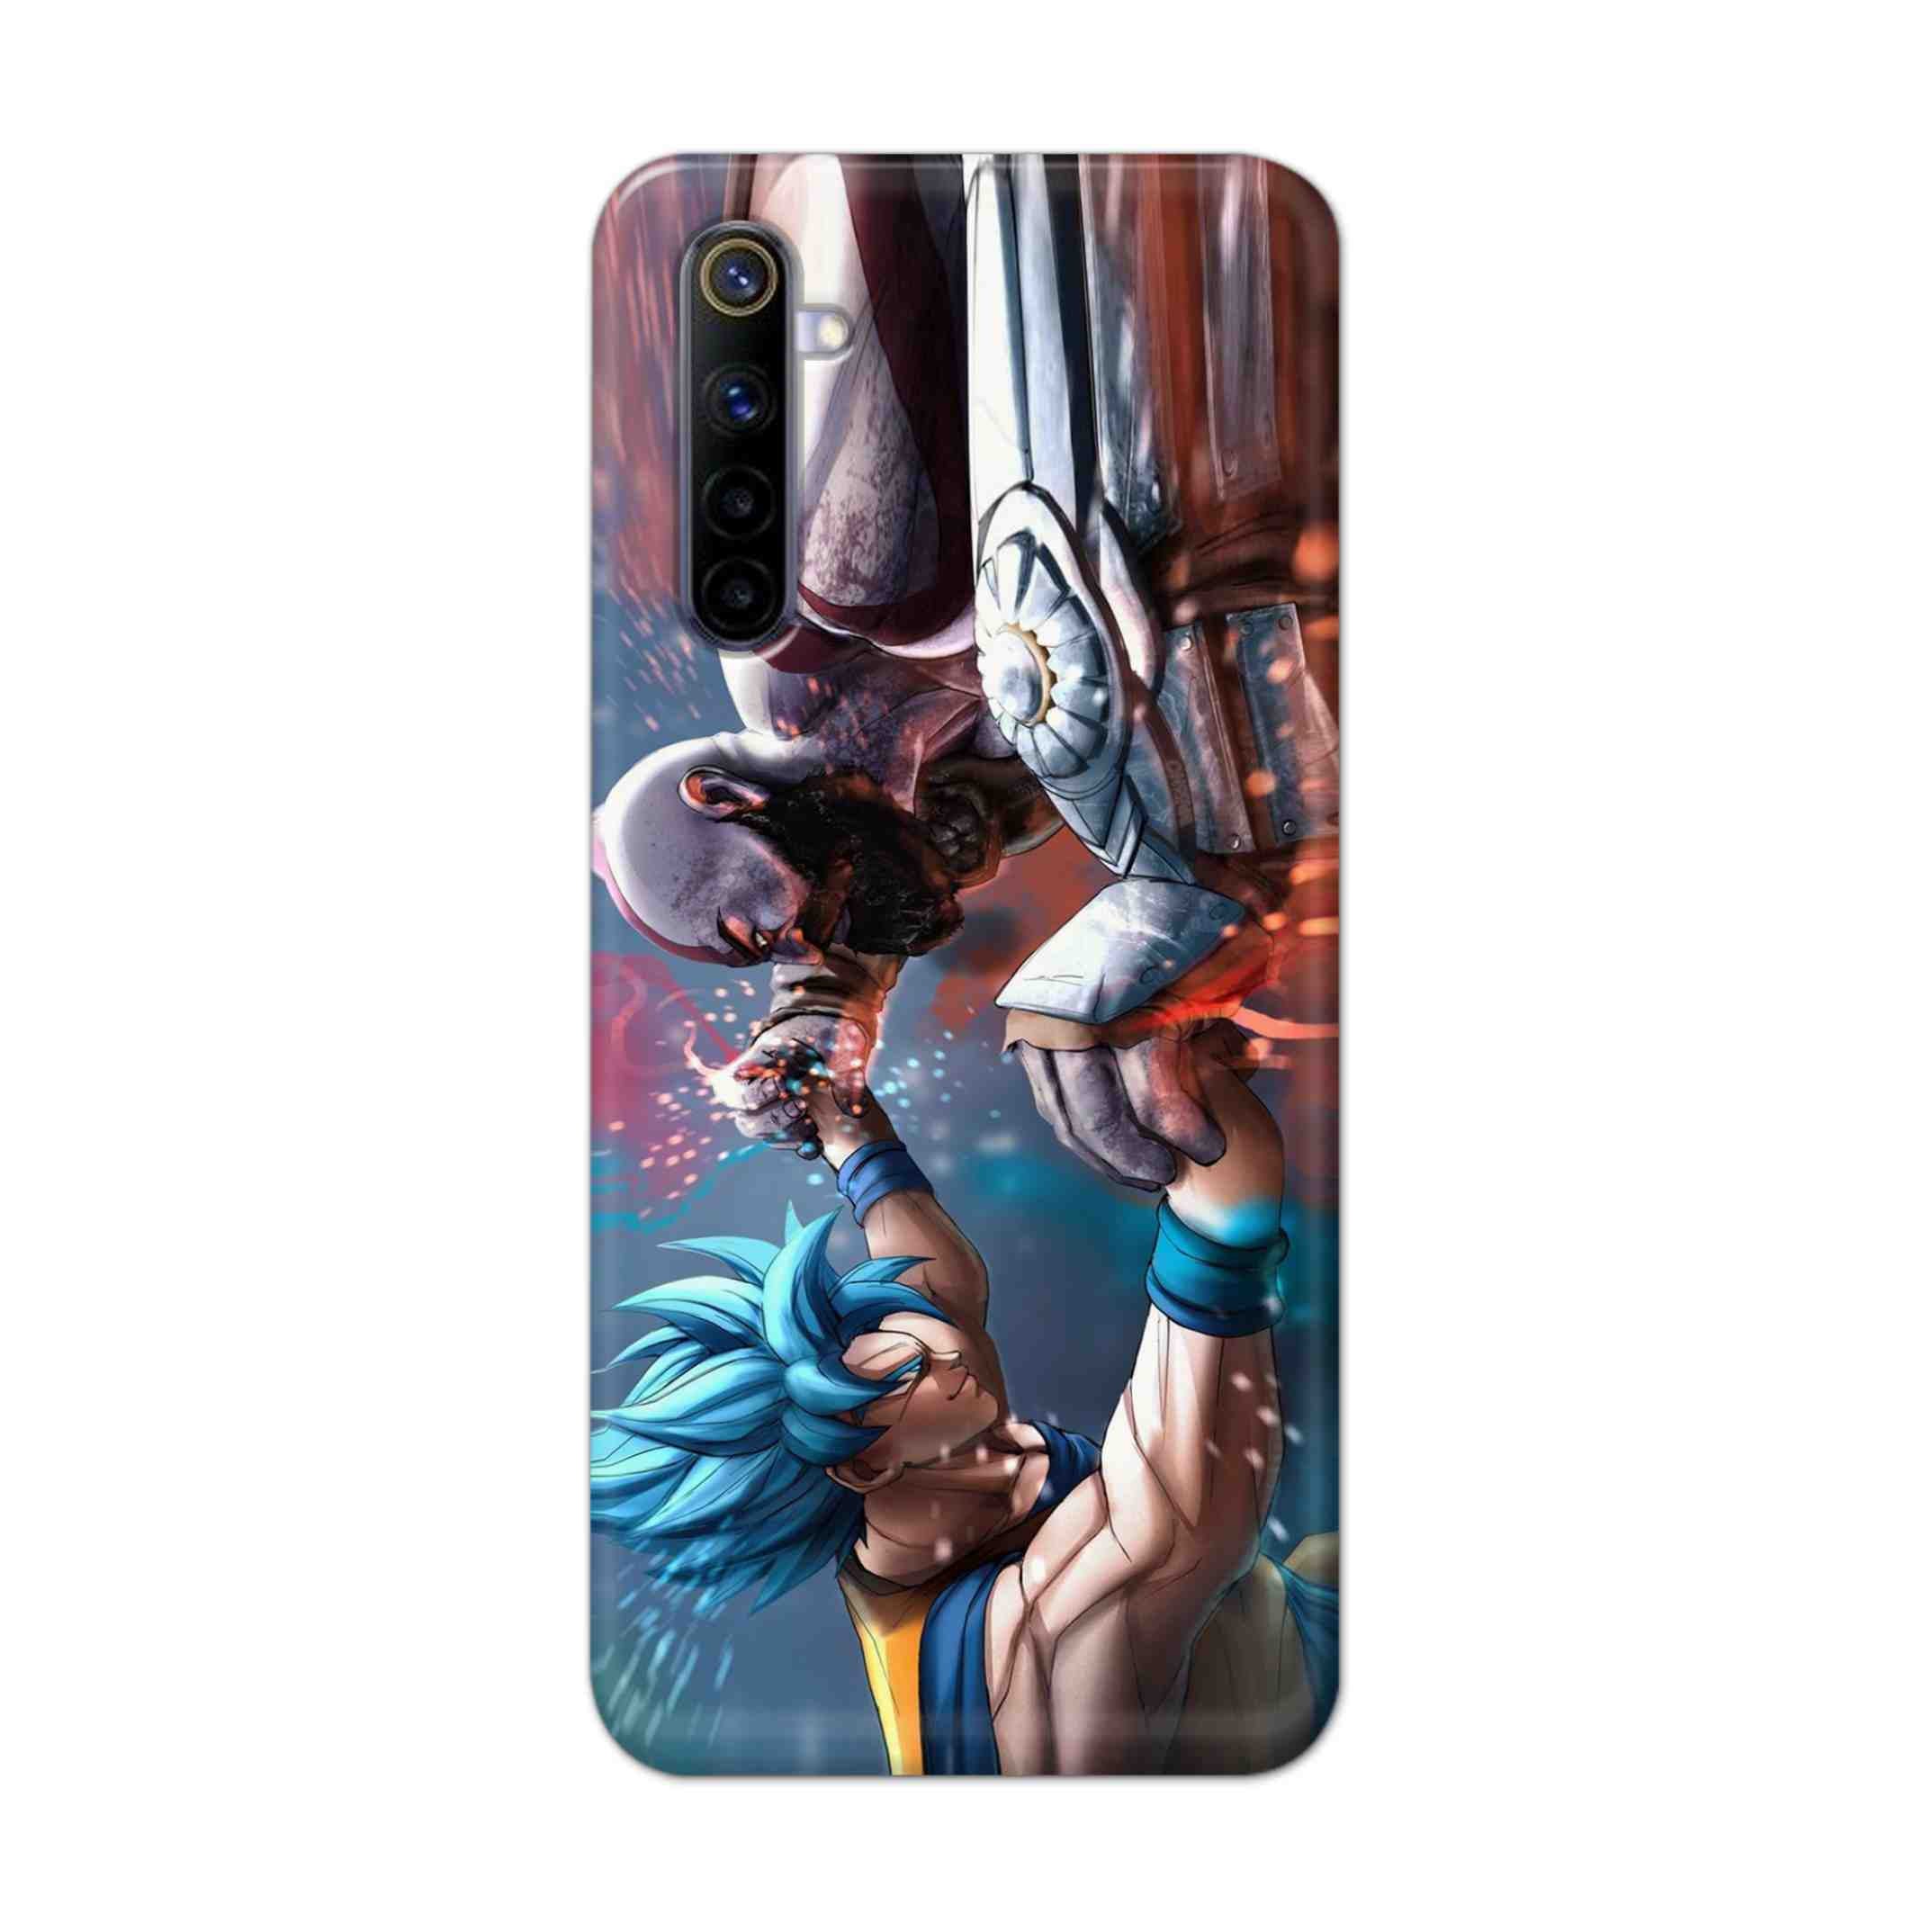 Buy Goku Vs Kratos Hard Back Mobile Phone Case Cover For REALME 6 PRO Online